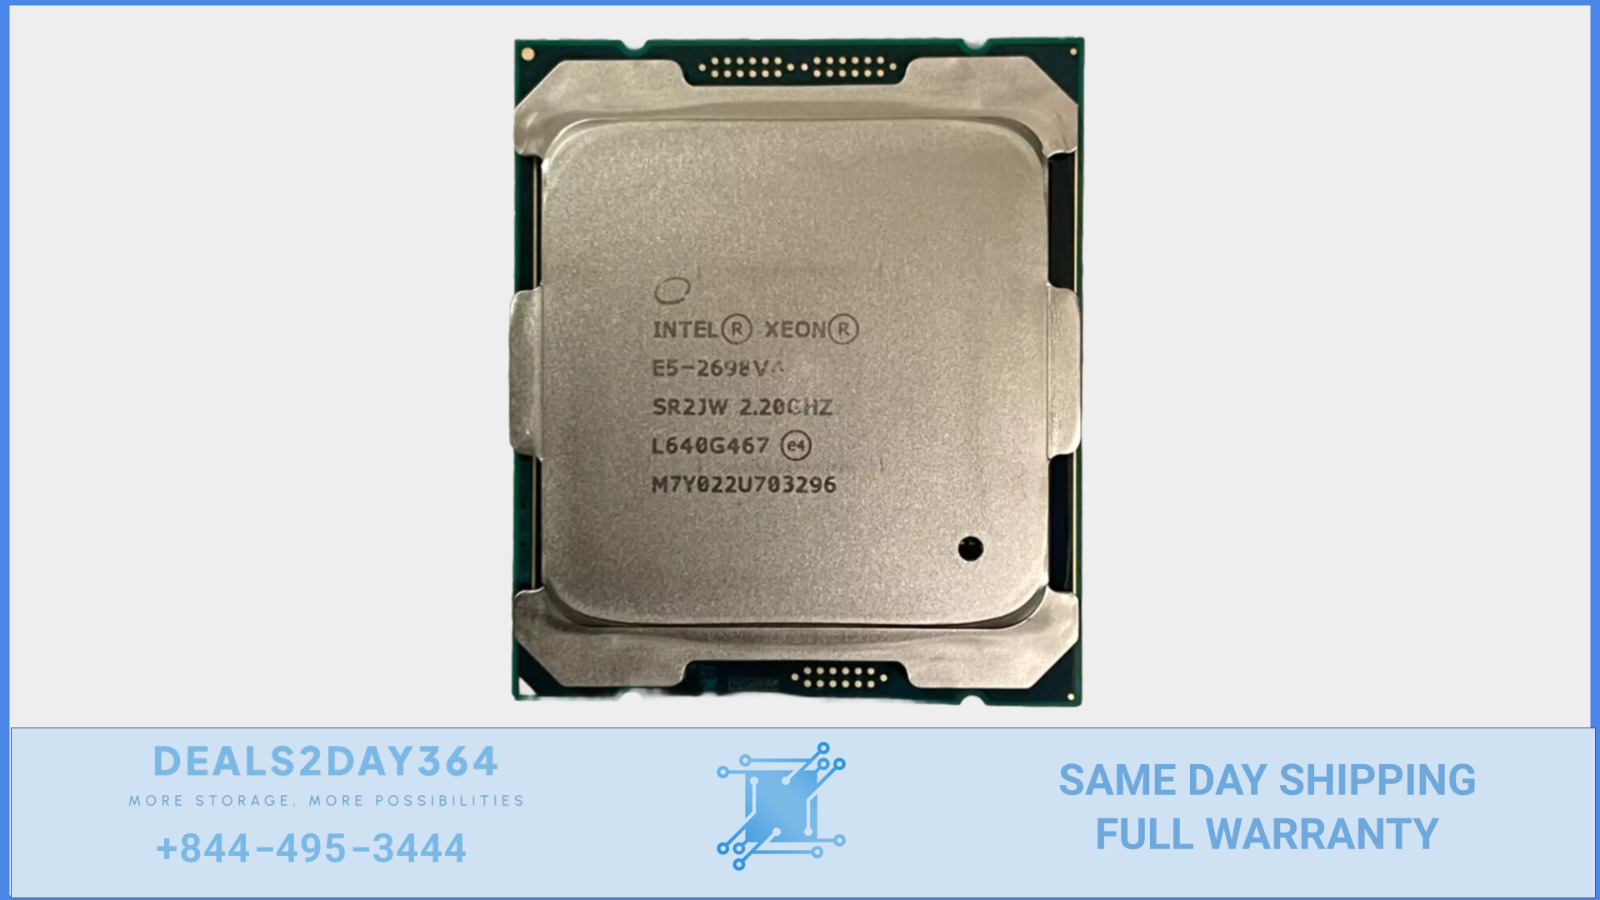 Intel Xeon E5-2698 V4 2.20GHz SR2JW Socket LGA2011-3 Server CPU Processor